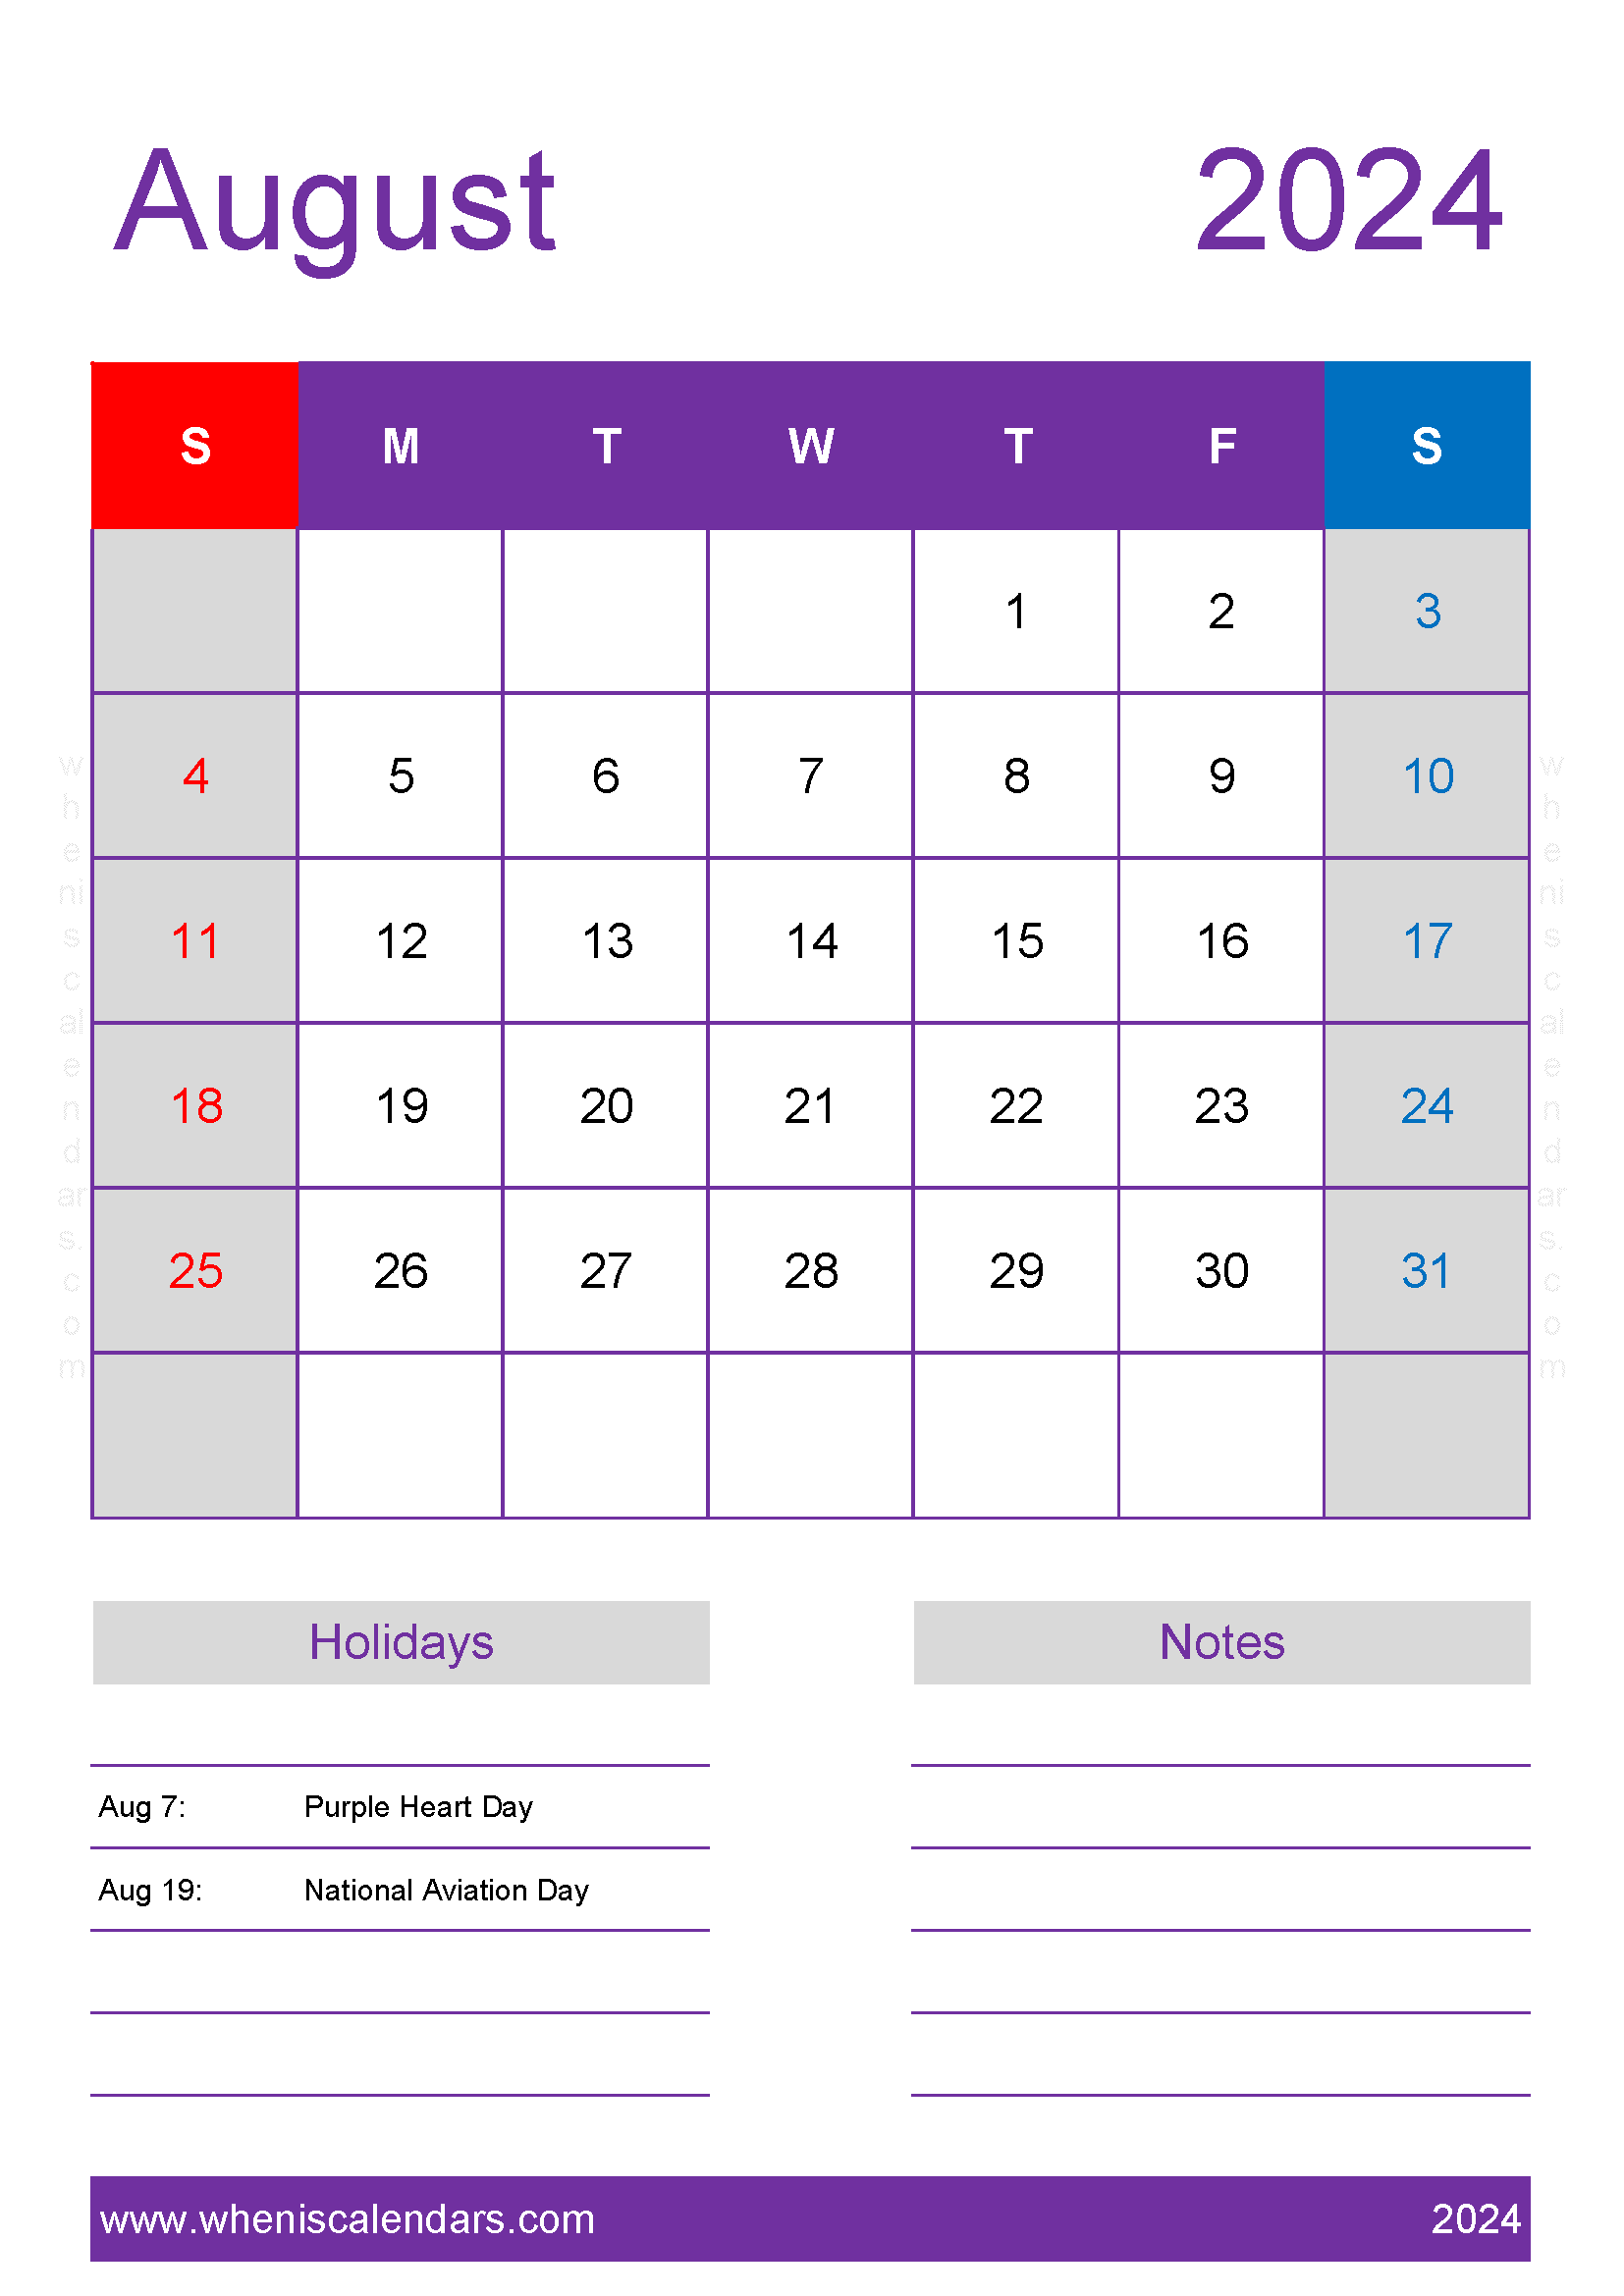 August 2024 Calendar in excel Monthly Calendar